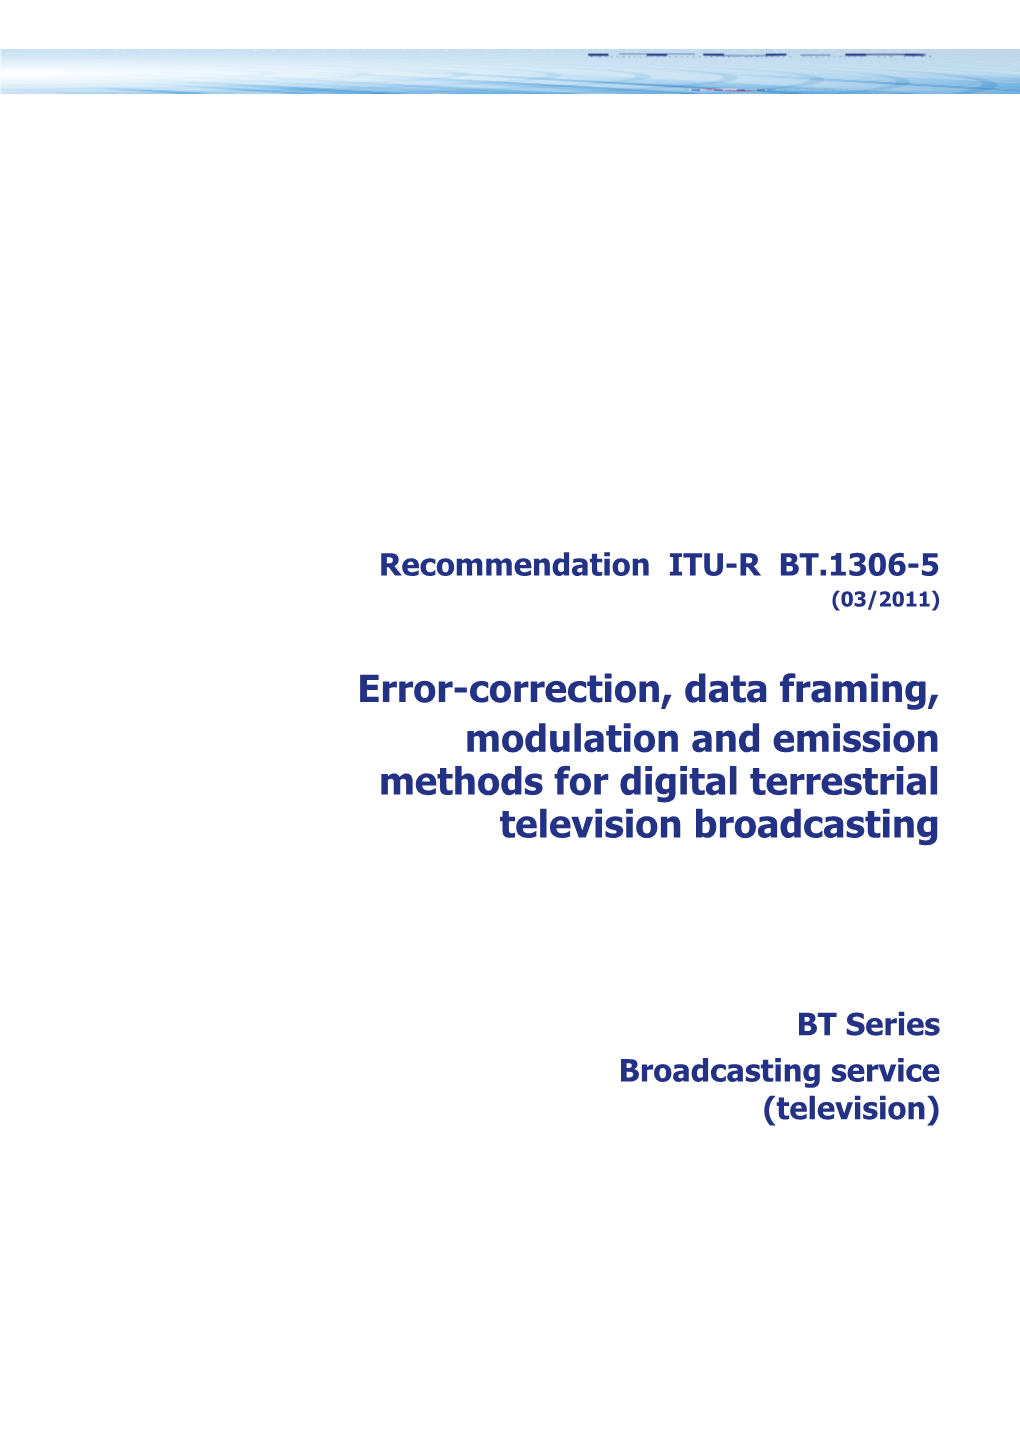 RECOMMENDATION ITU-R BT.1306-5 - Error-Correction, Data Framing, Modulation and Emission